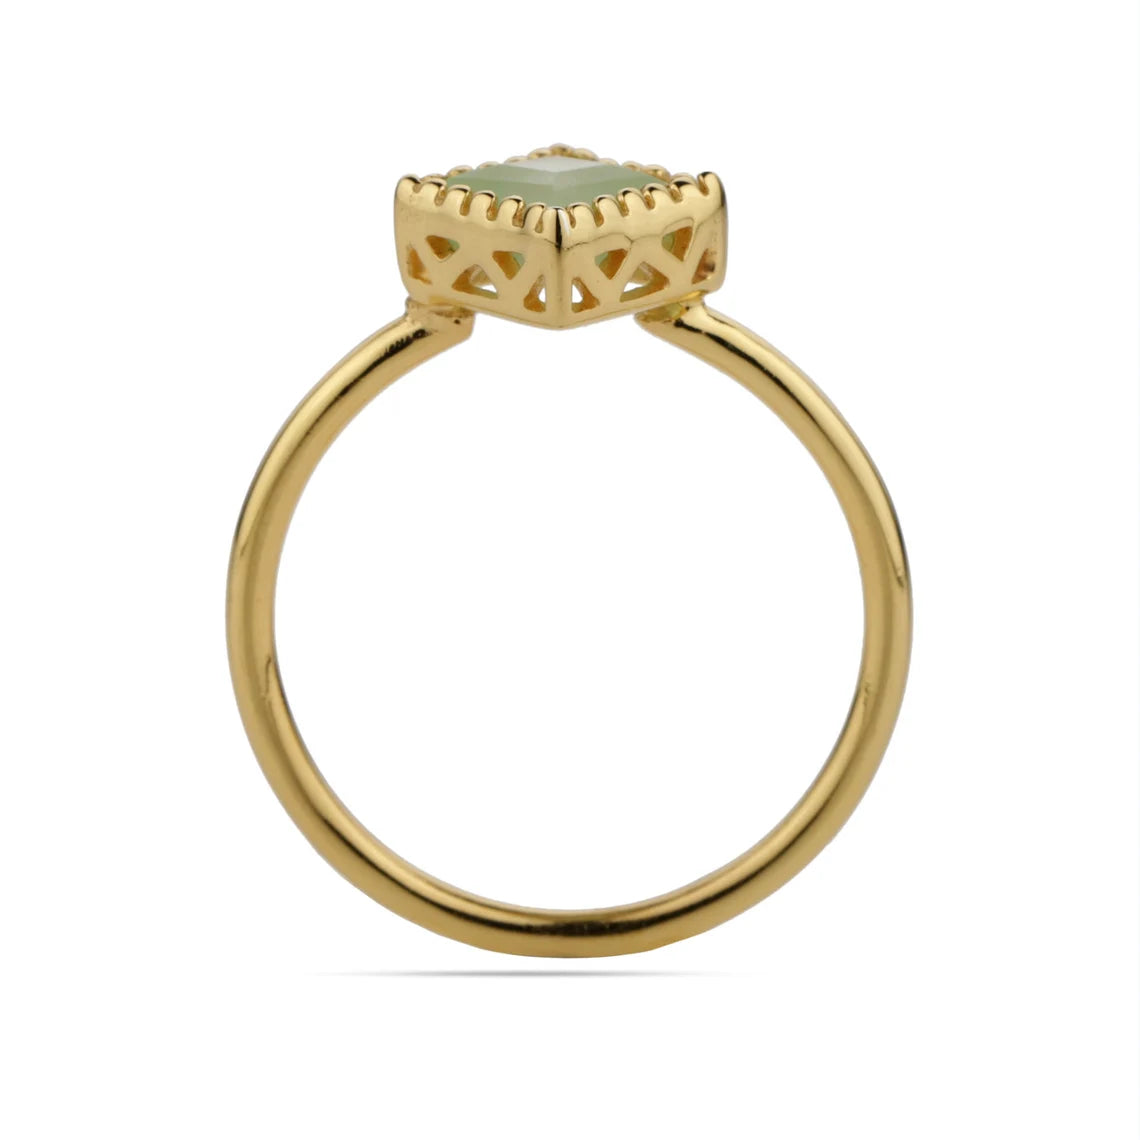 Green Chalcedony Gold Ring, Gemstone Ring - Stacking Minimalist Ring - Birthstone